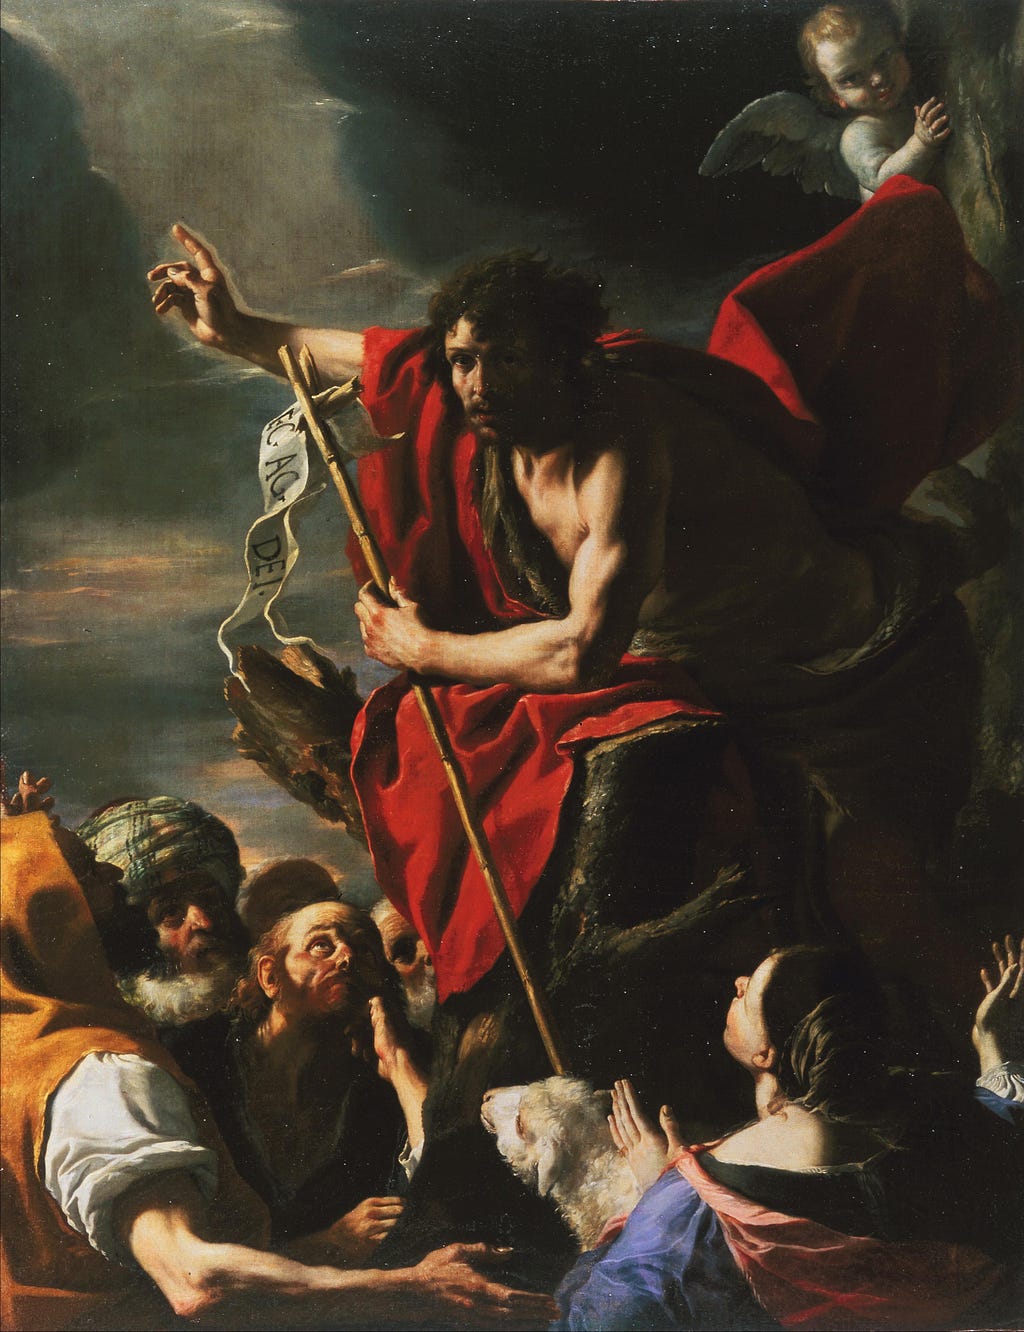 Painting of John the Baptist Preaching by Mattia Preti